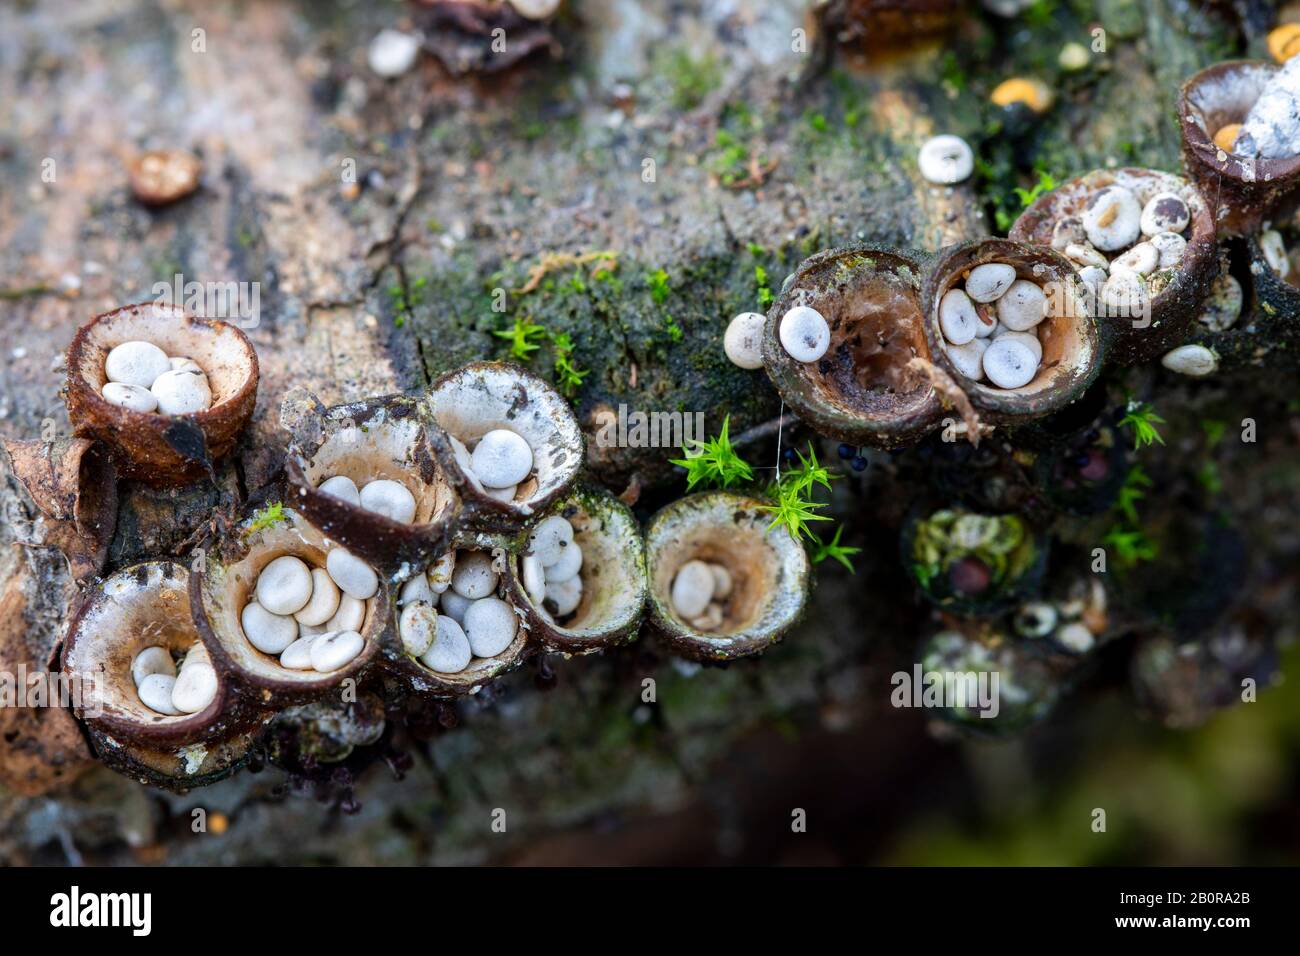 Crucibulum laeve, small mushrooms like bird nests. Leon, Spain Stock Photo